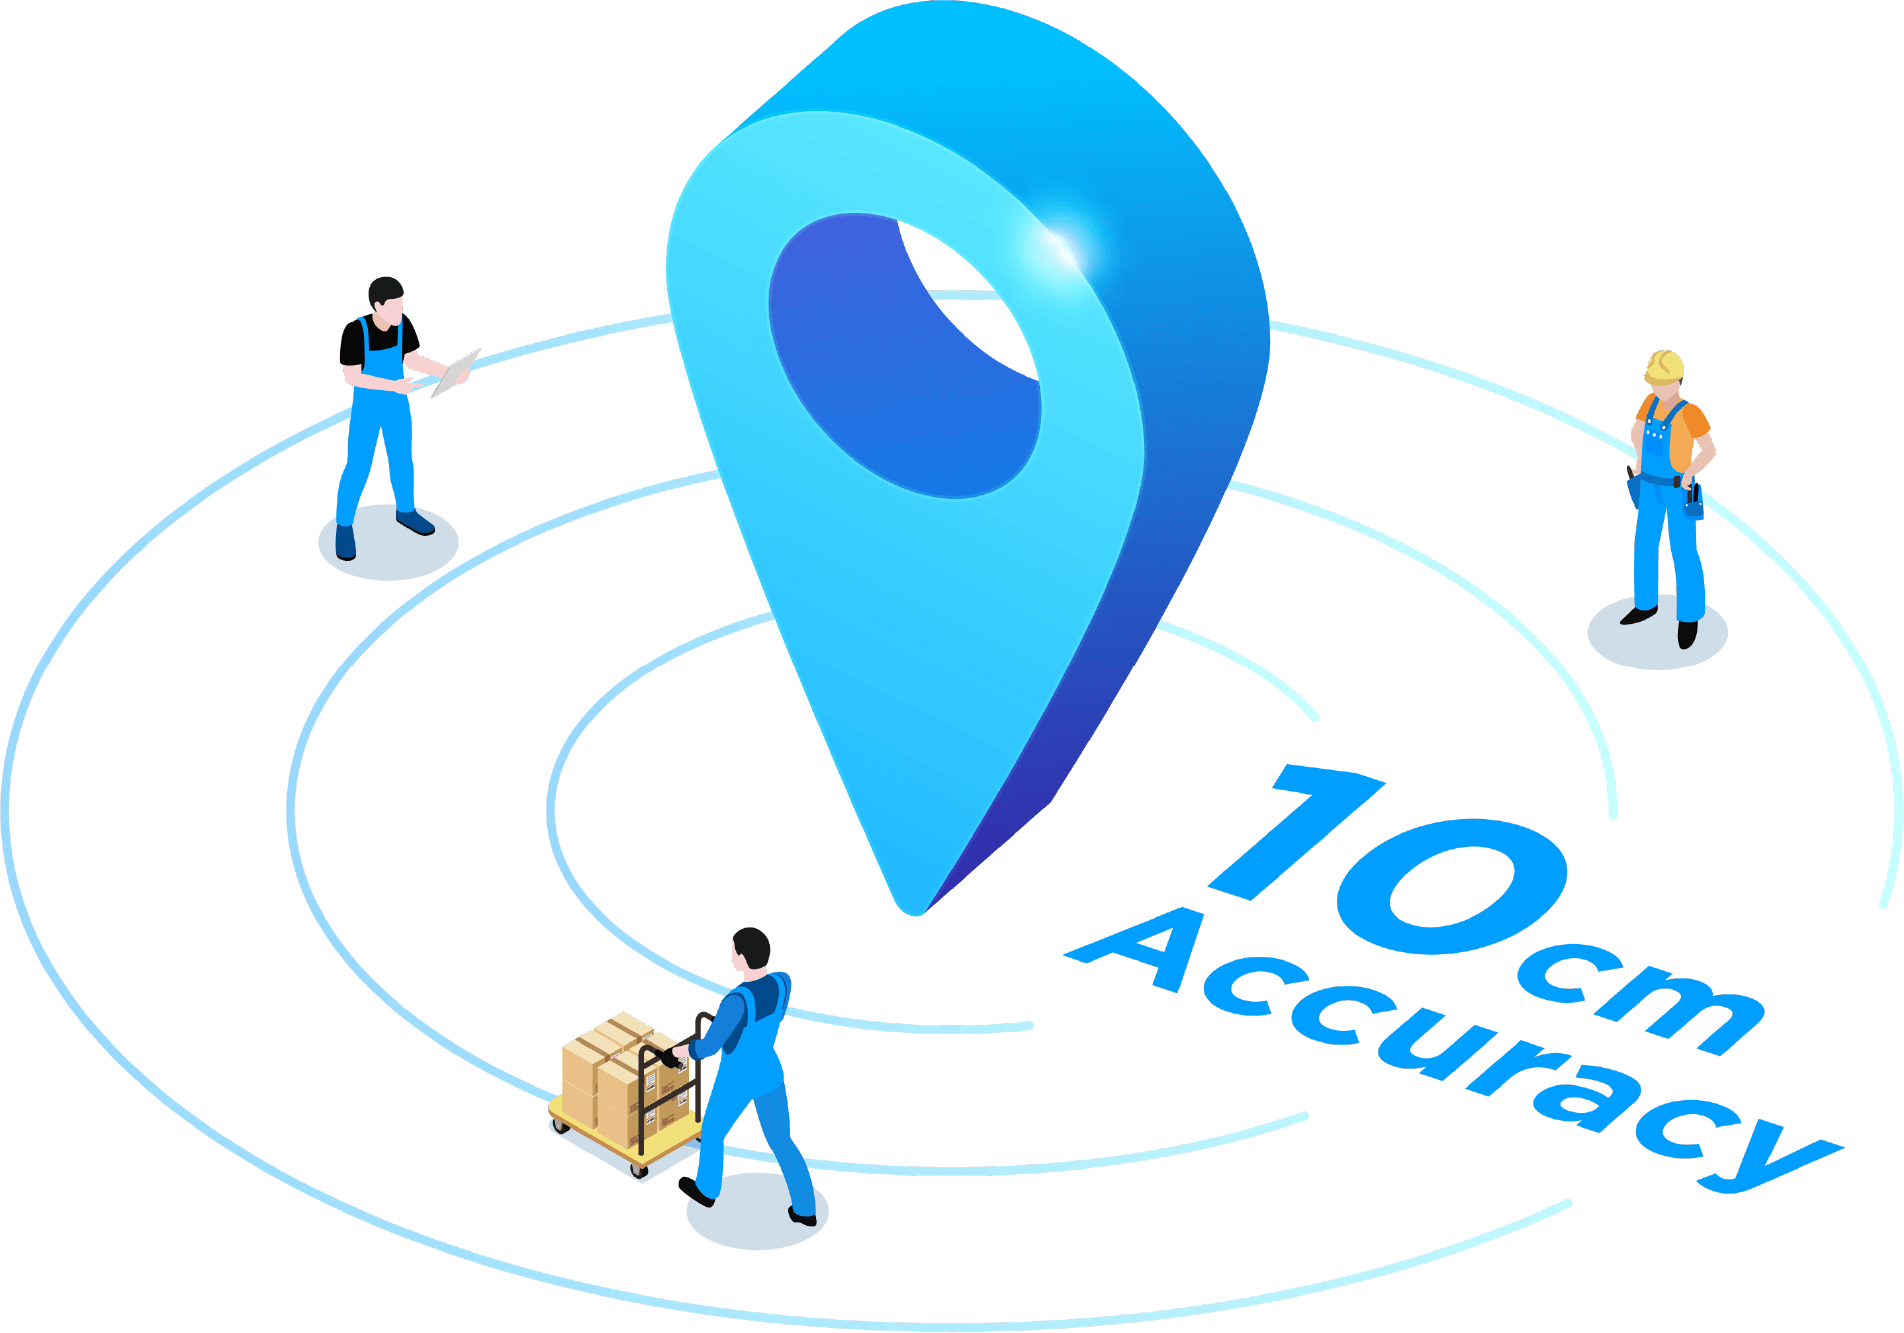 location based service provider